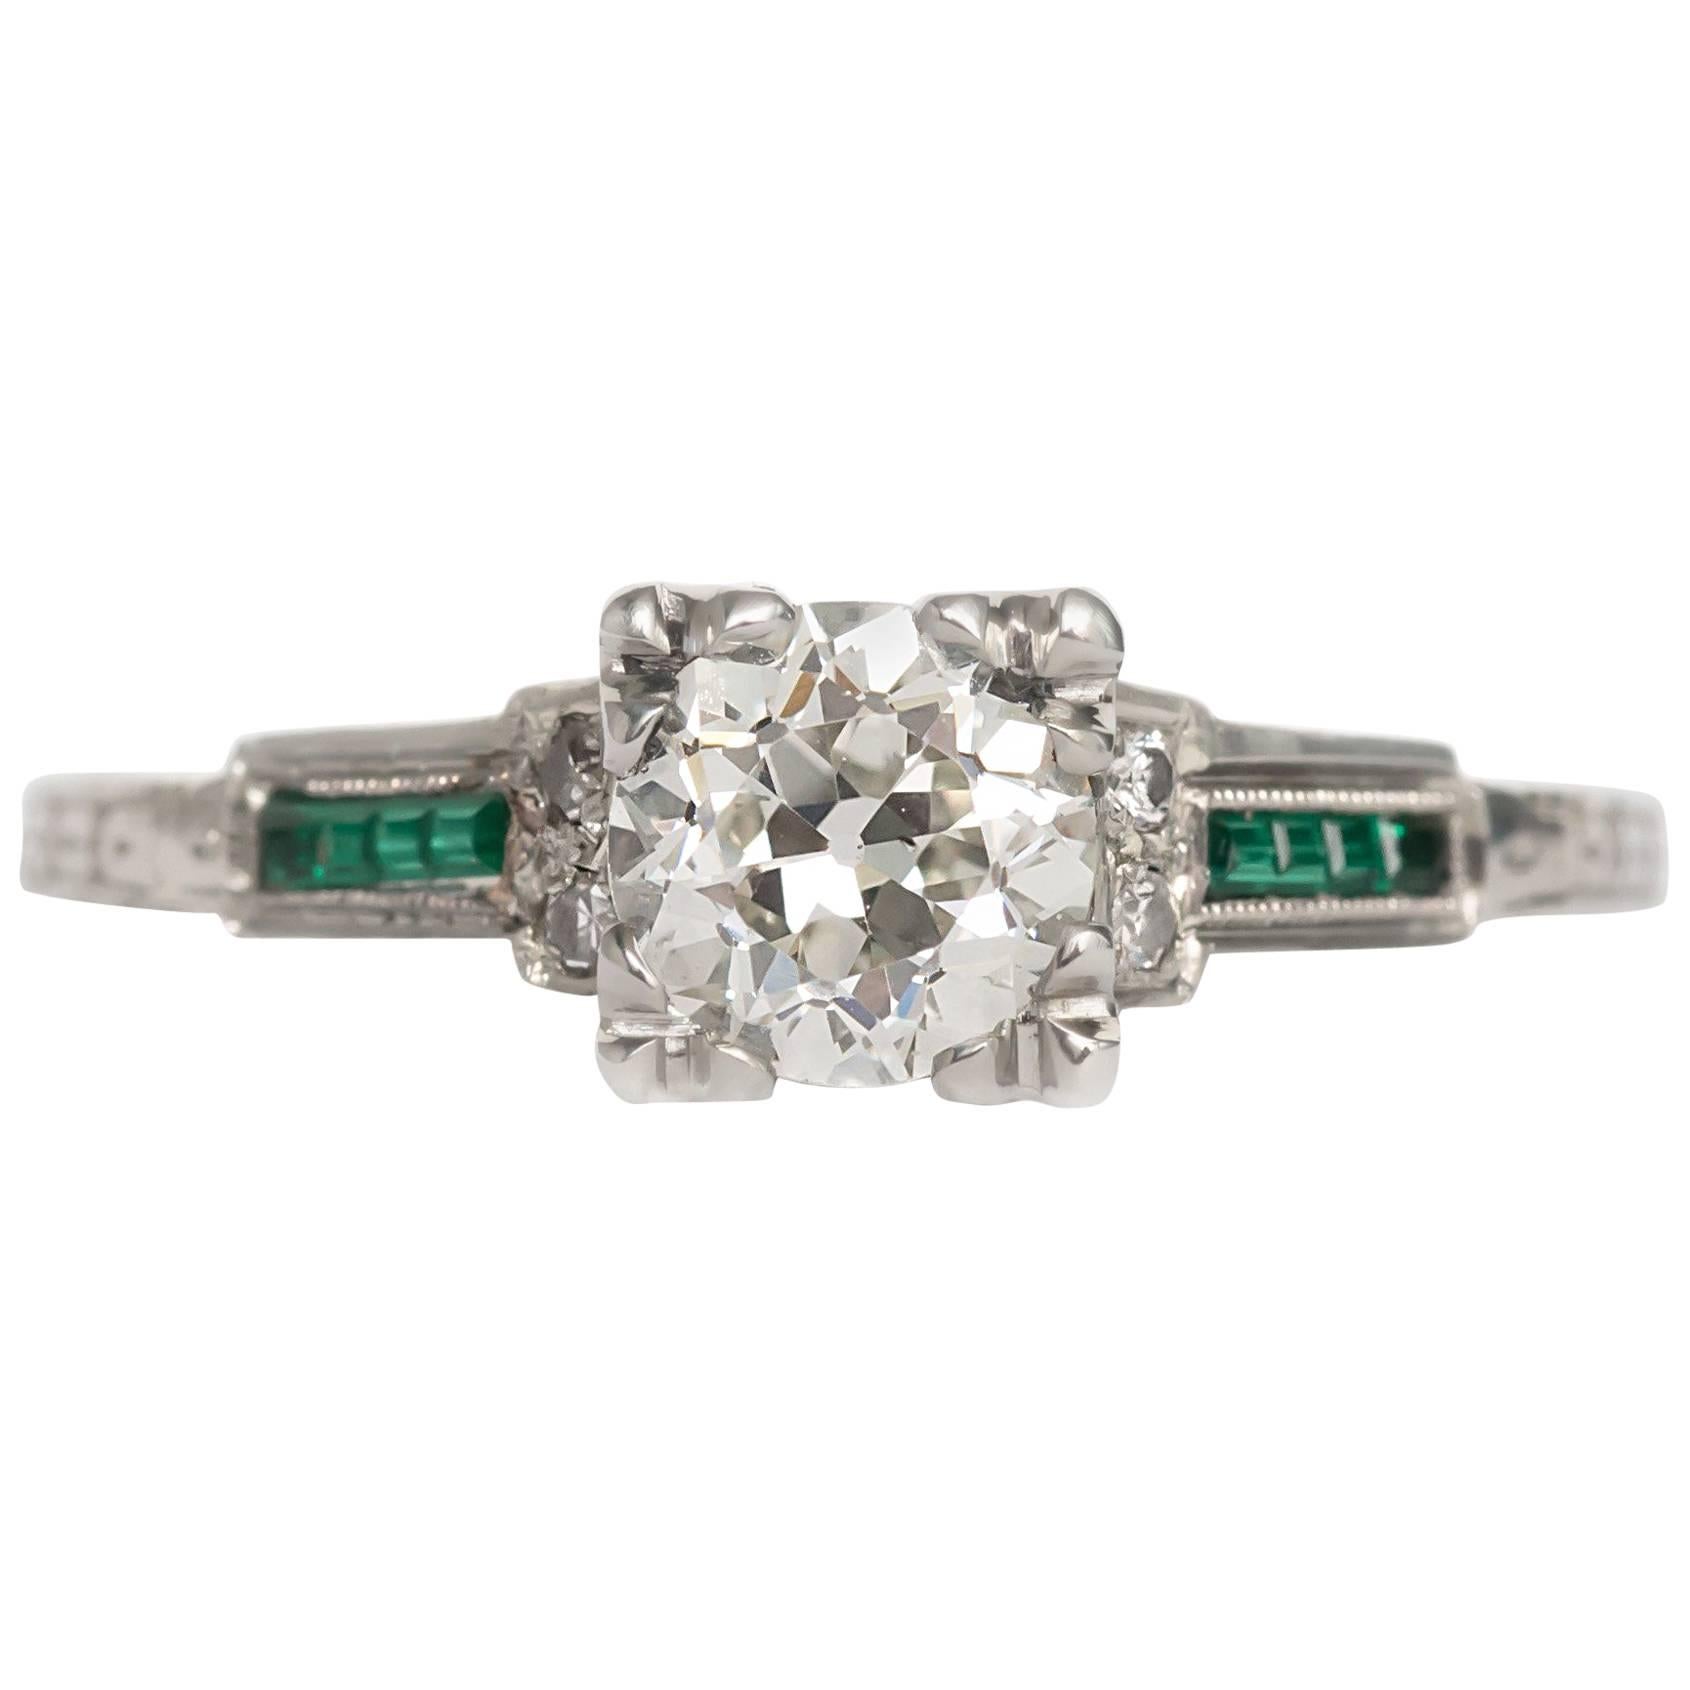 1930 White Gold Art Deco Circular Brilliant Diamond and Emerald Engagement Ring